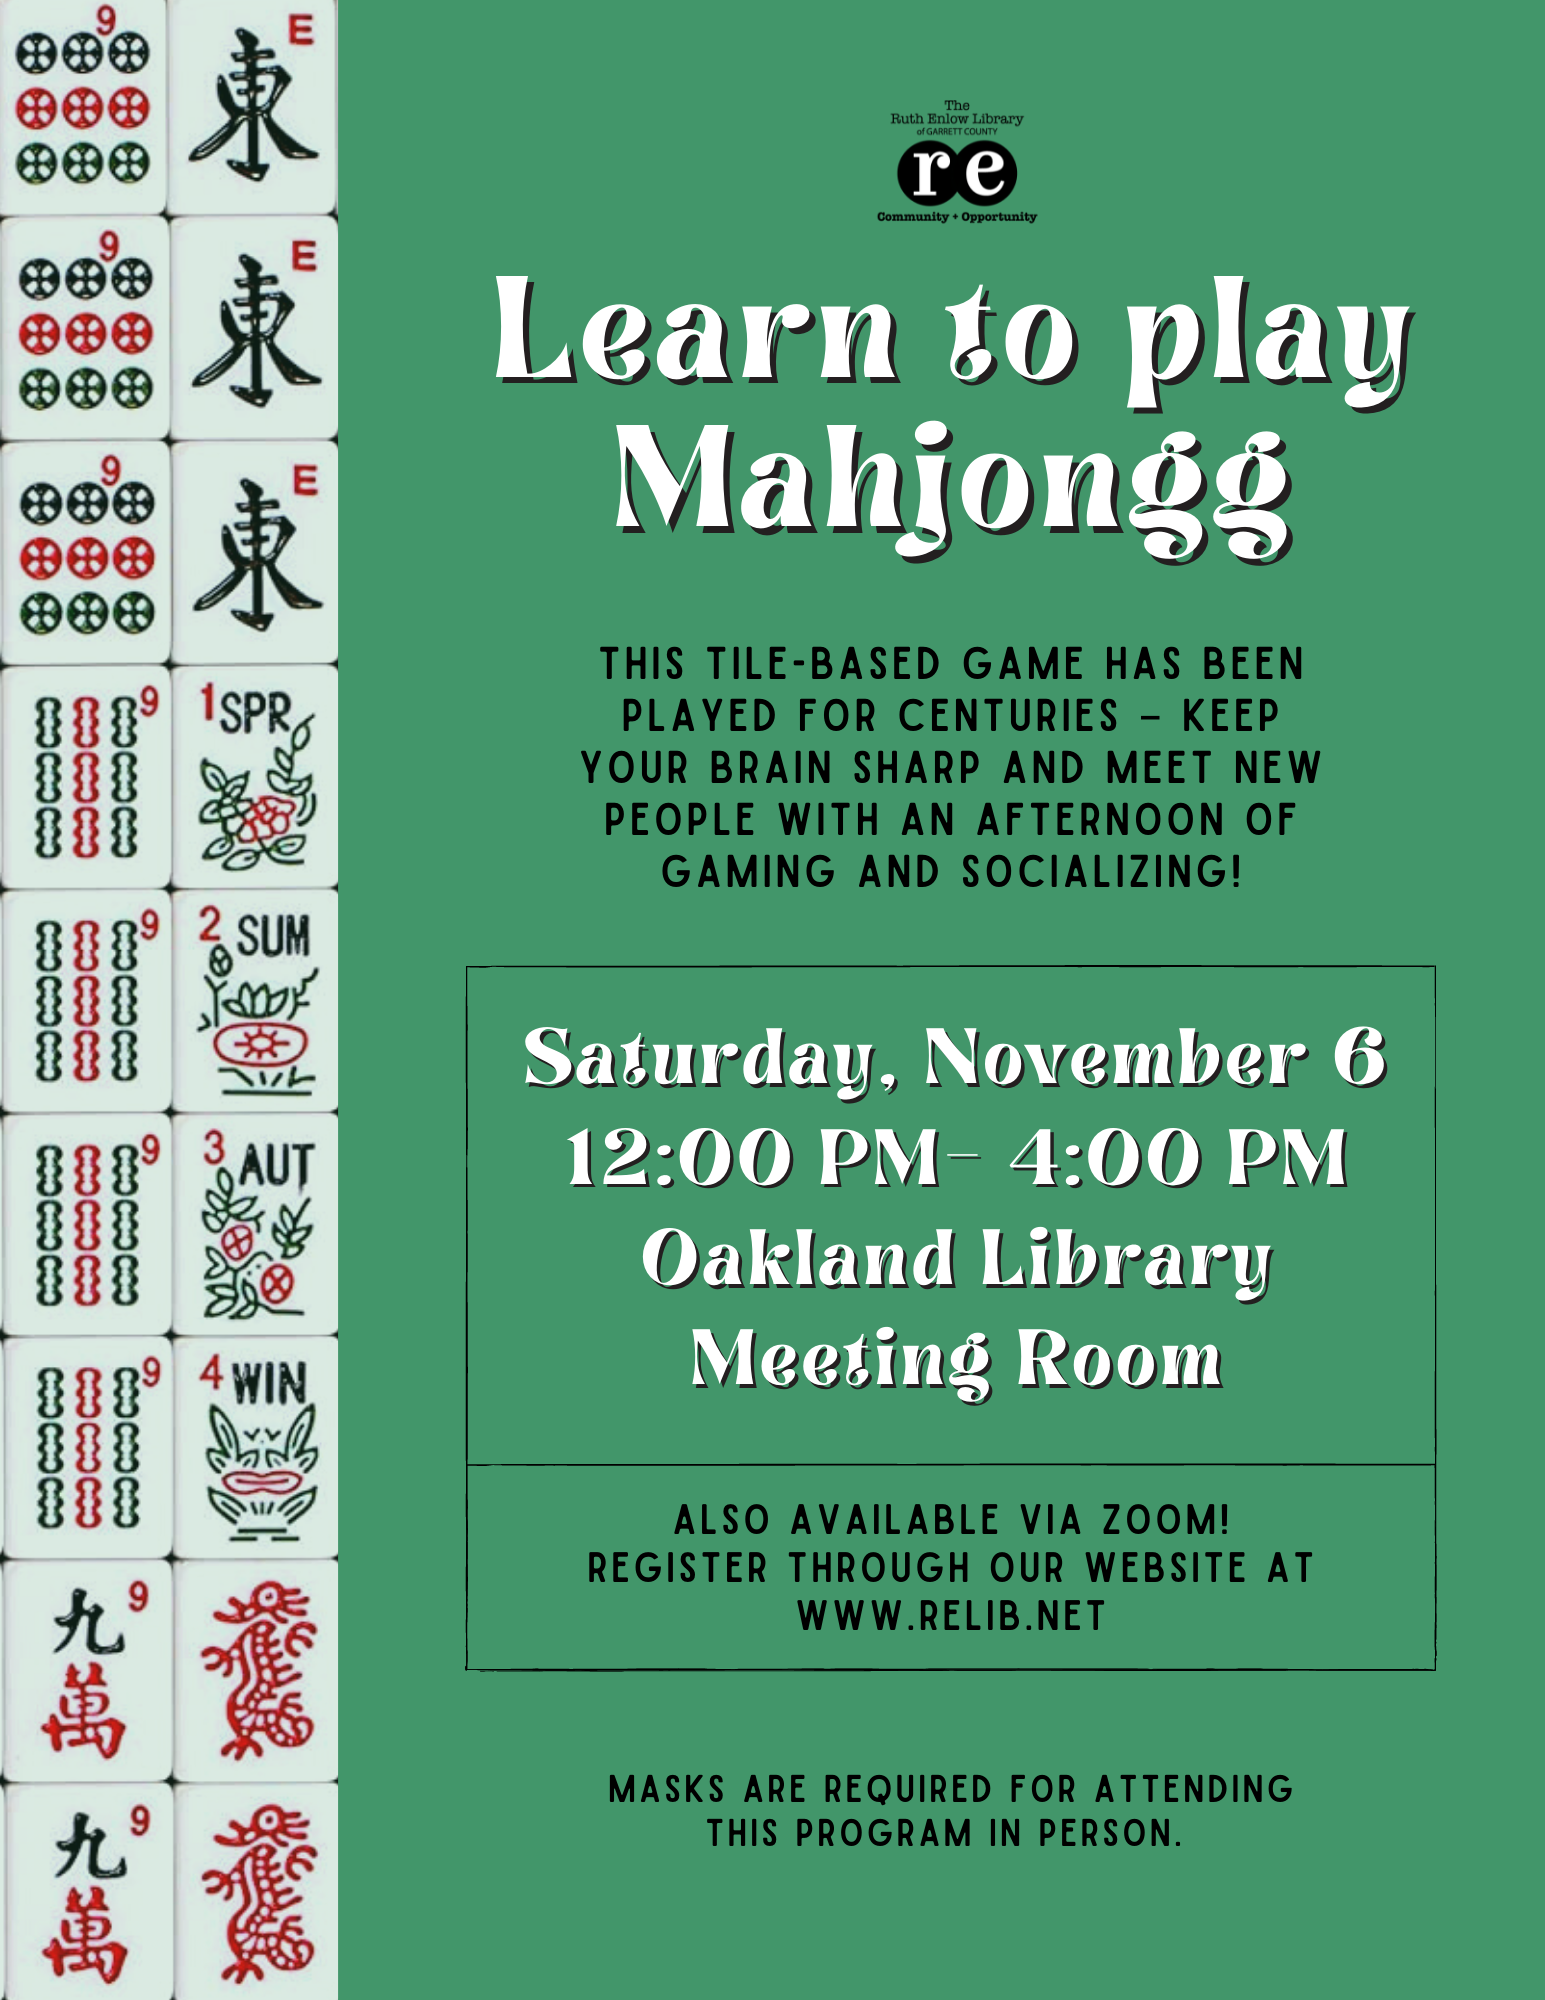 Learn to play Mahjongg